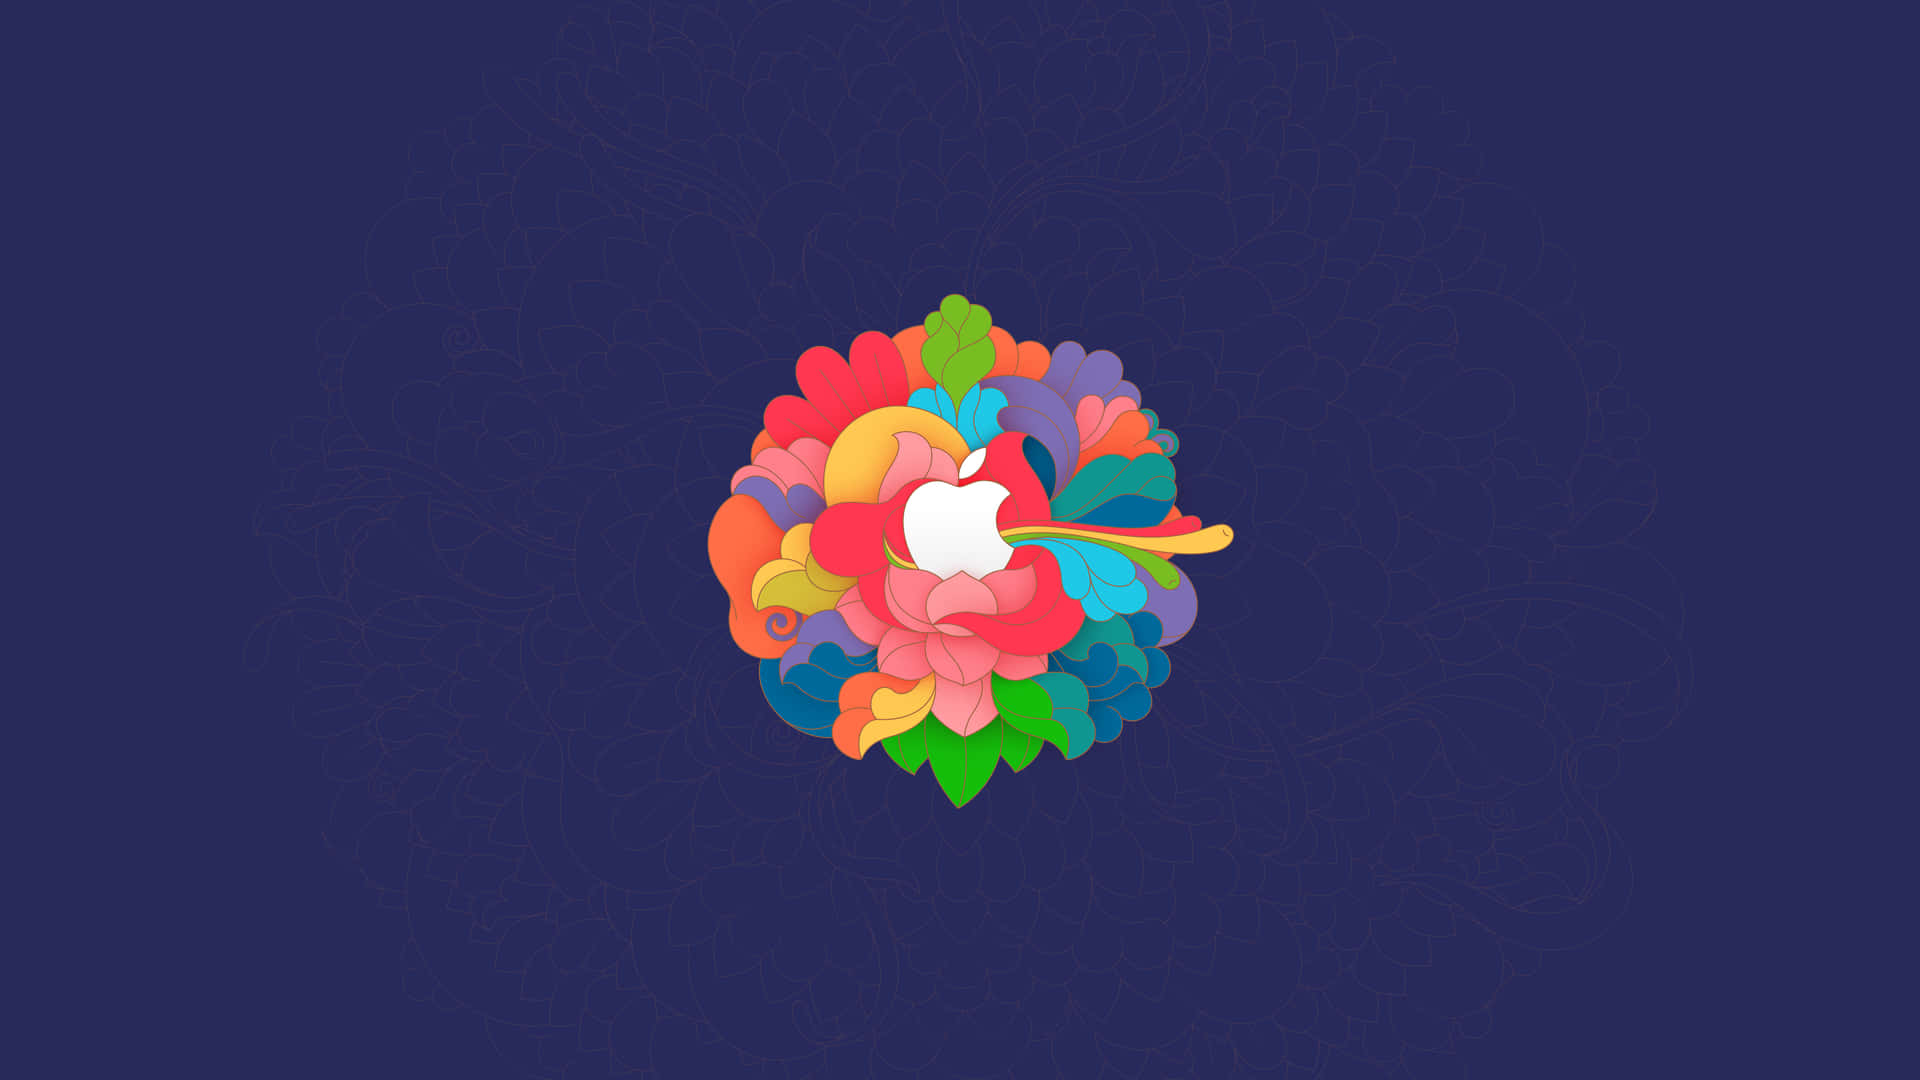 Logotipode Apple Con Flores Coloridas En El Fondo. Fondo de pantalla